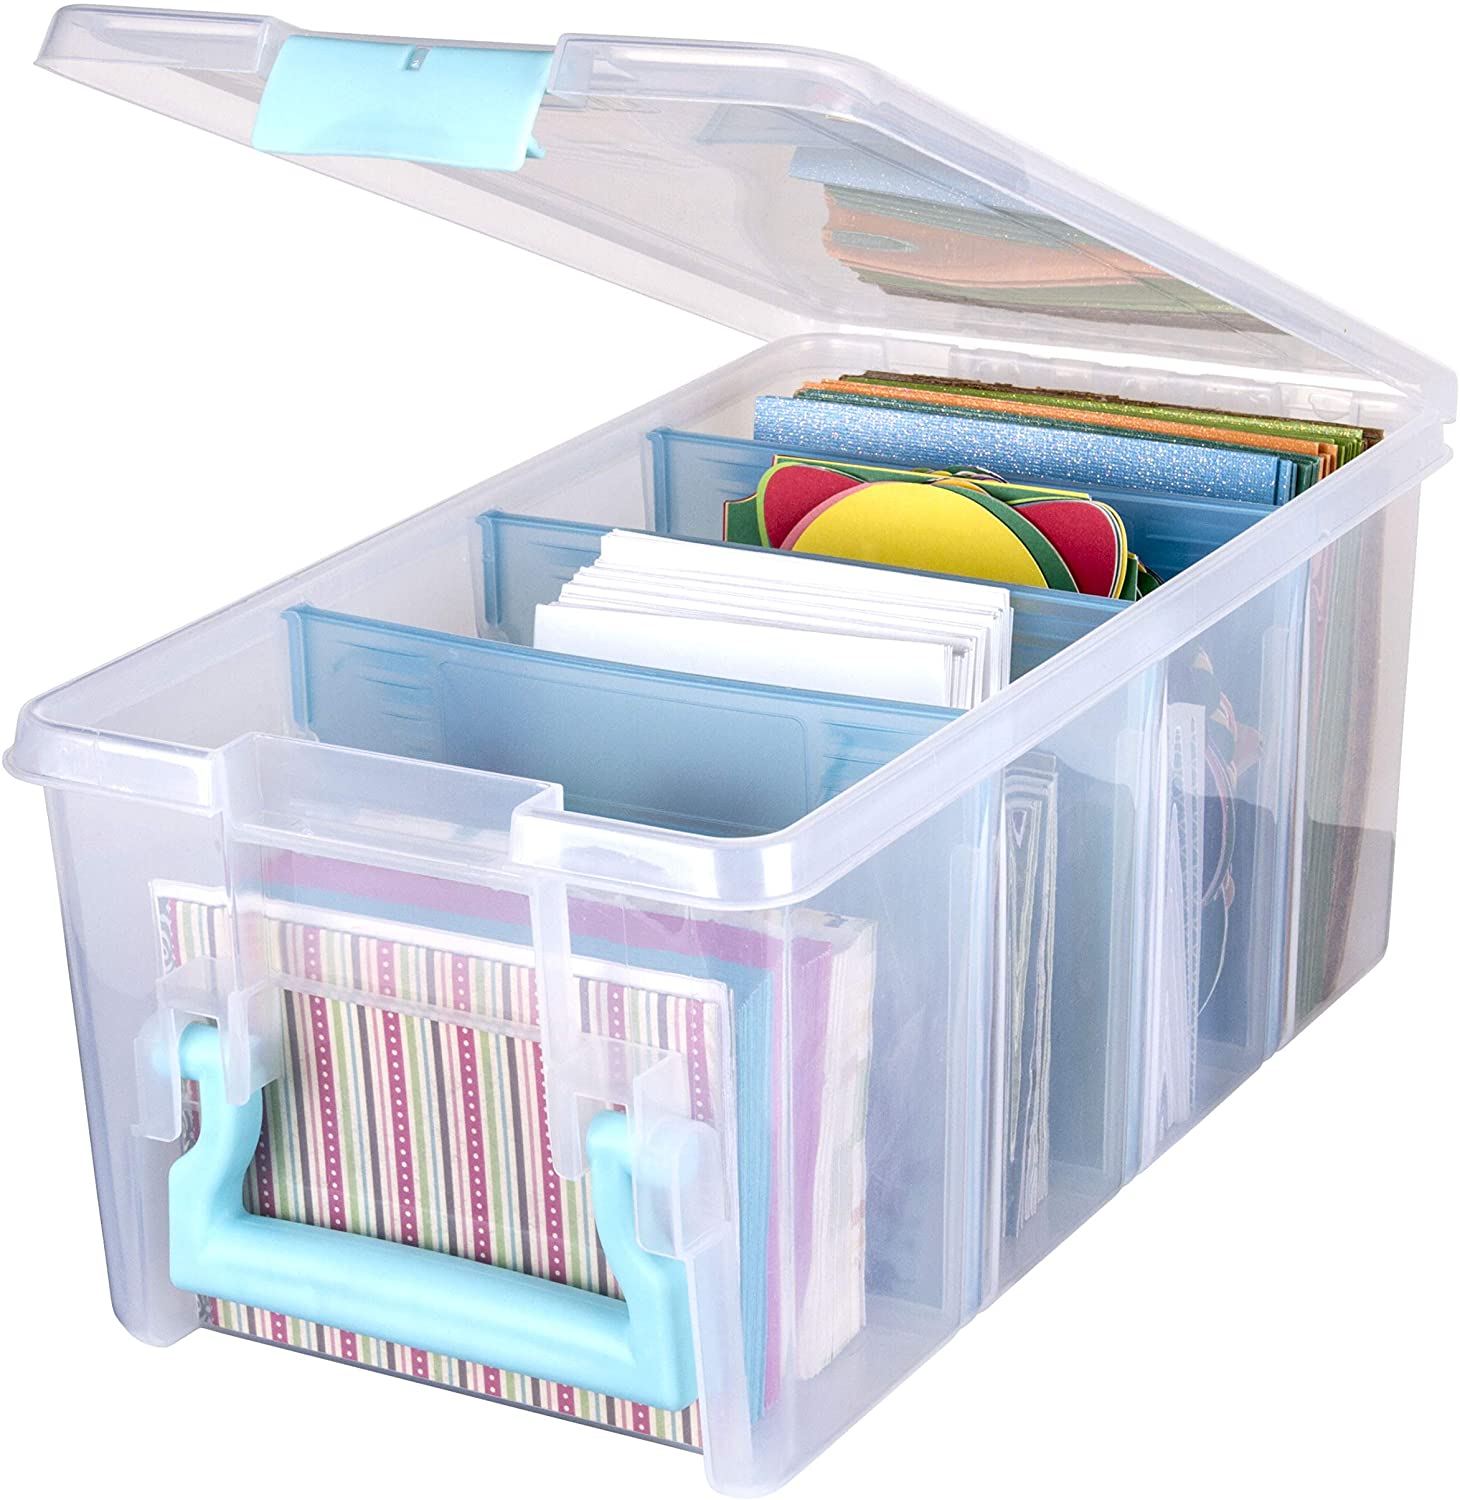 ArtBin Plastic Book Storage Box With Dividers & Handles